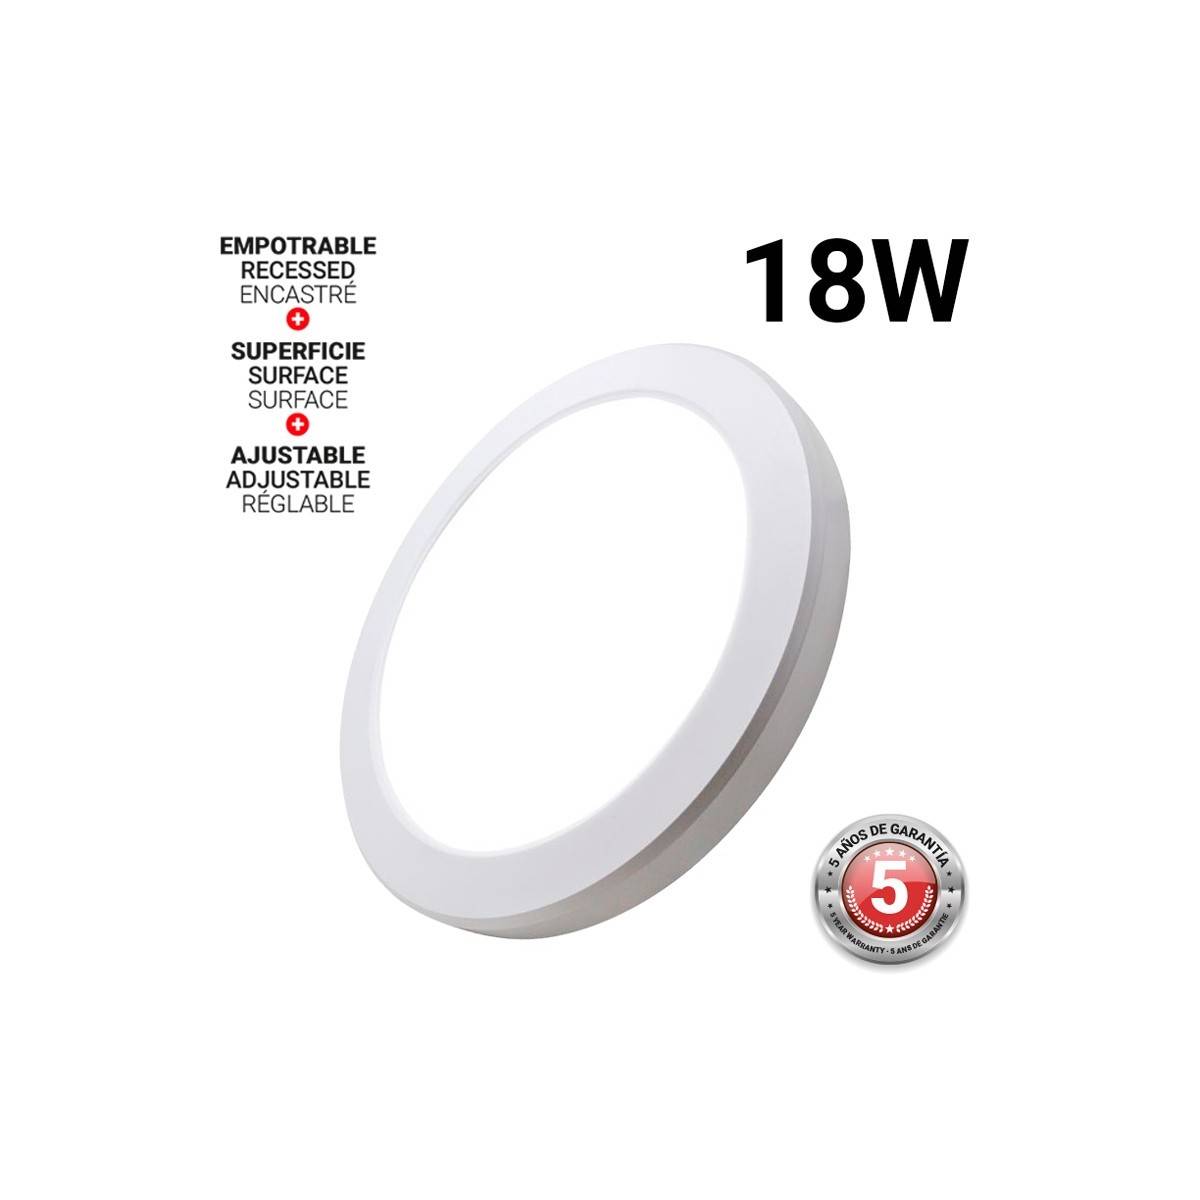 Plafoniera LED universale 18W diametro regolabile superficie e incasso